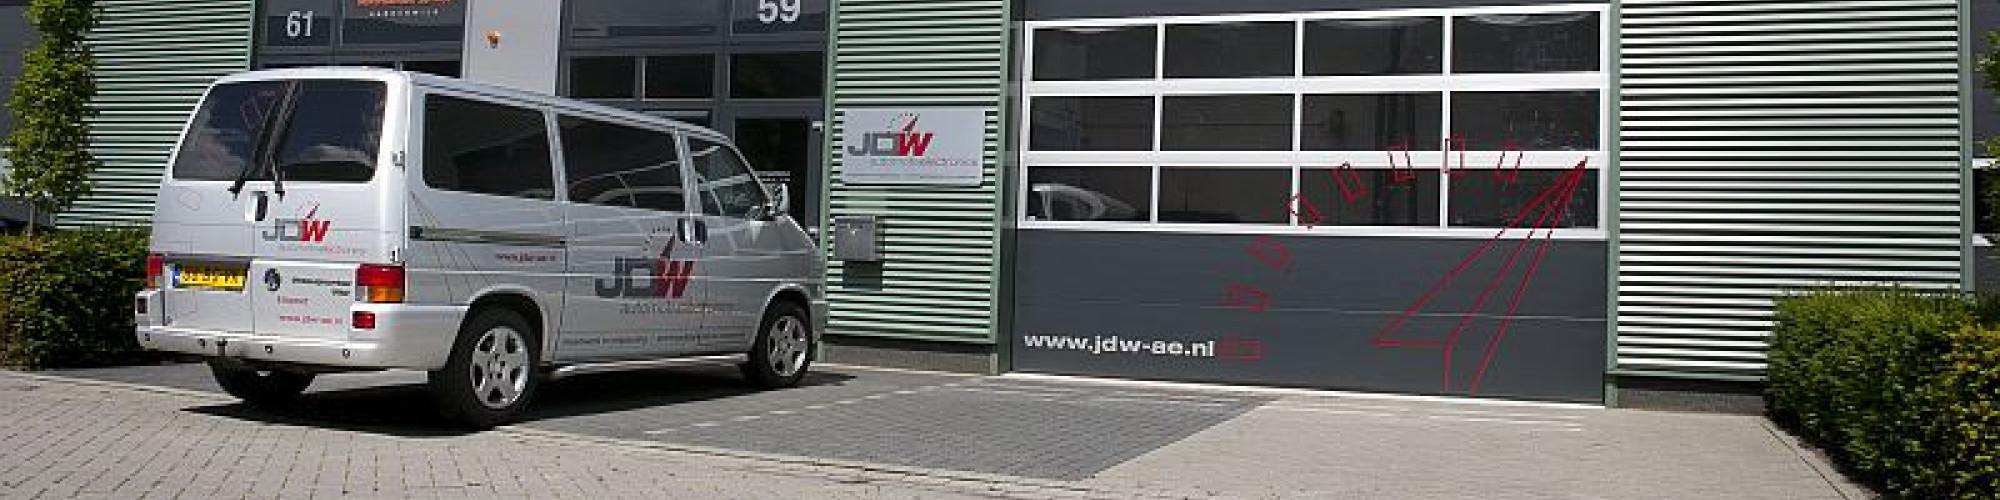 Bedrijfspand JDW AE auto chiptuning